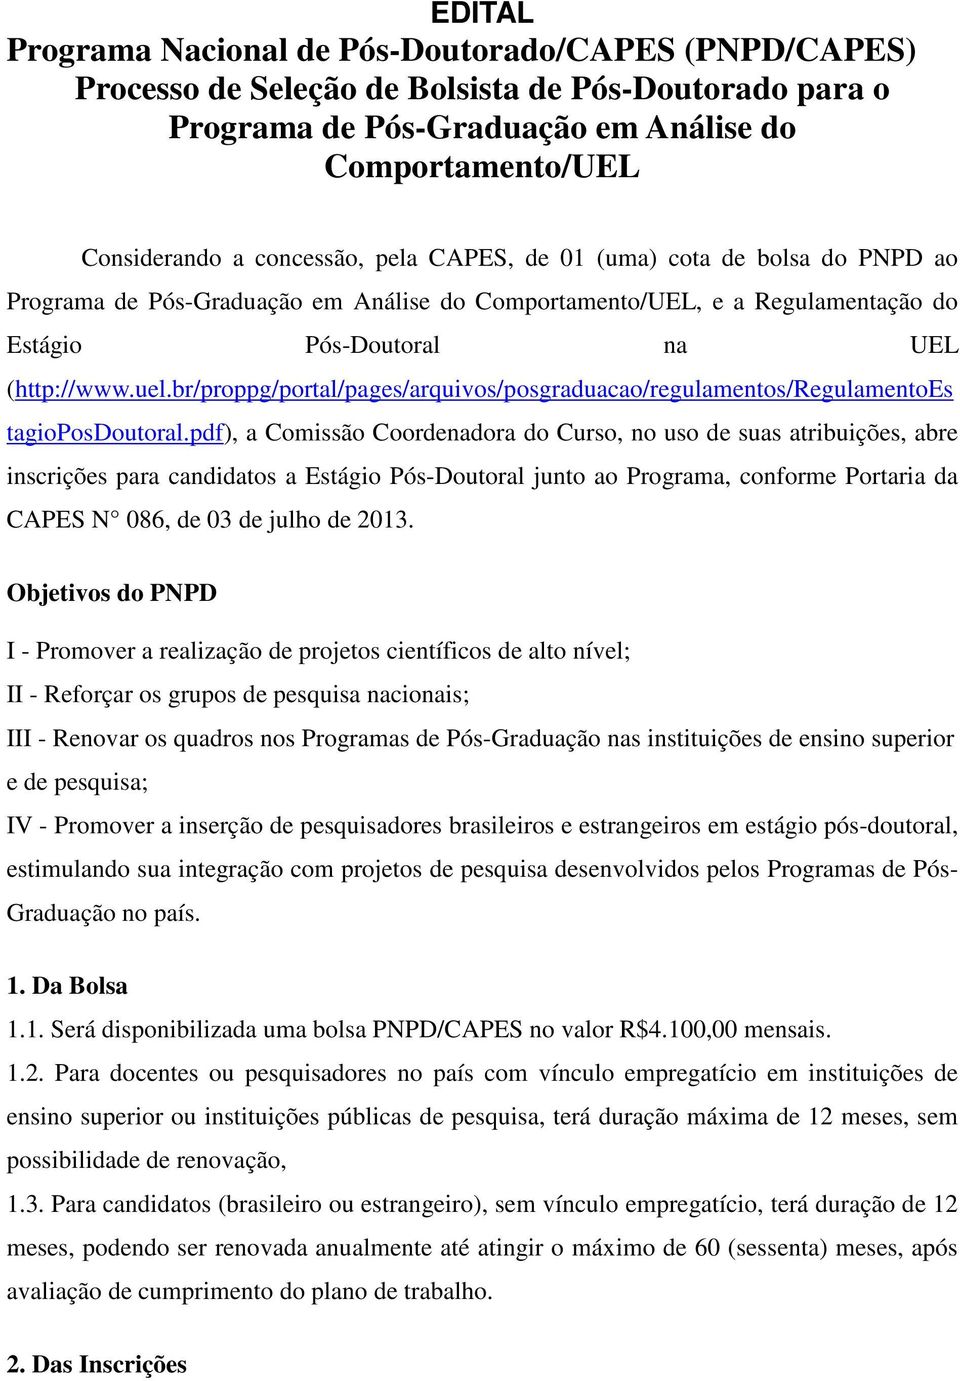 br/proppg/portal/pages/arquivos/posgraduacao/regulamentos/regulamentoes tagioposdoutoral.